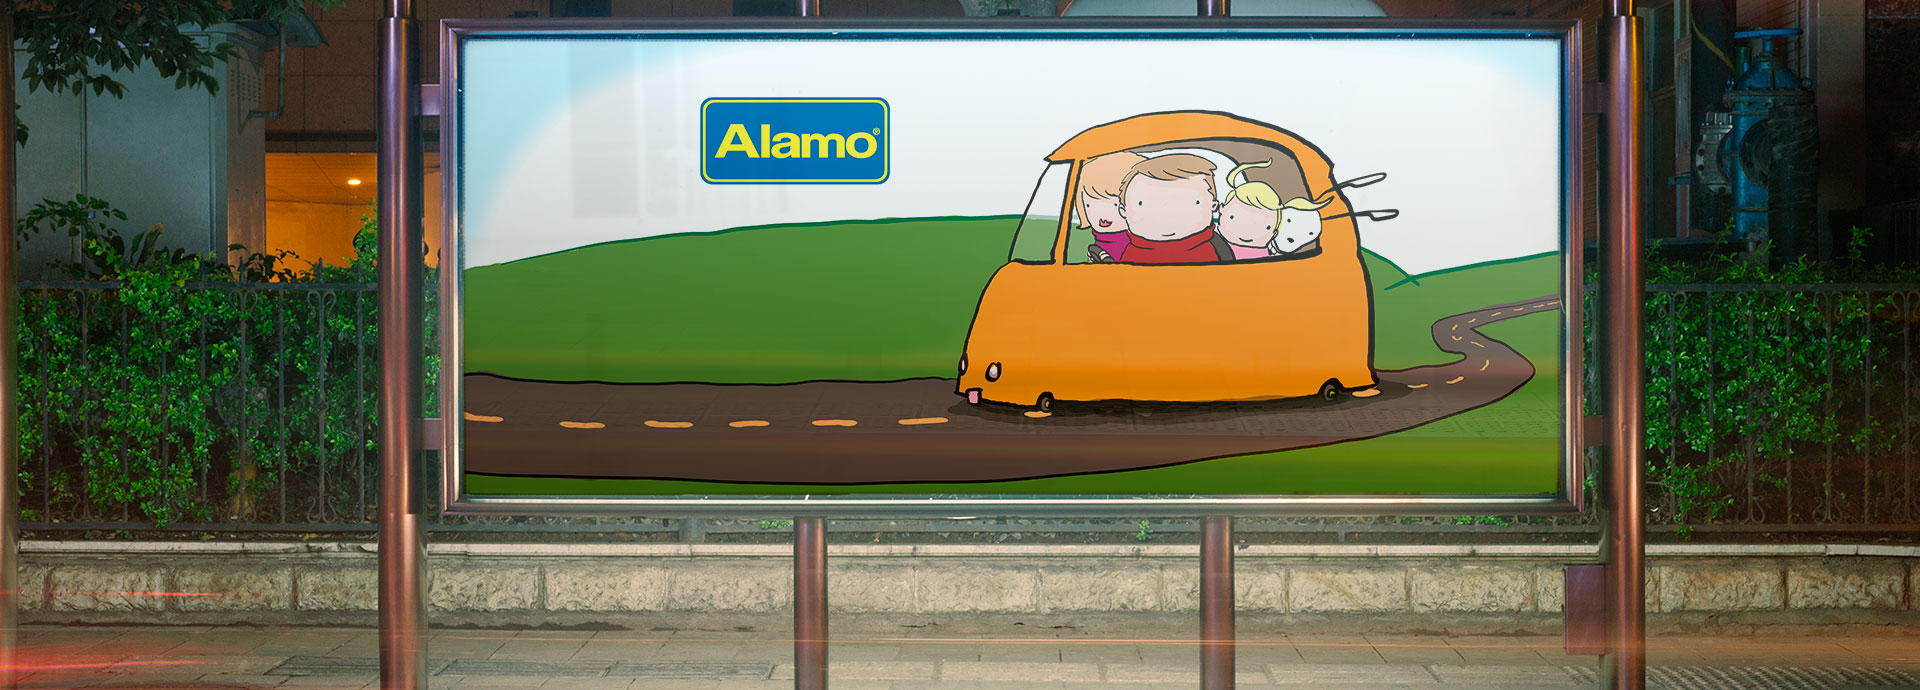 CAR RENTAL DEALS WITH ALAMO MIAMI